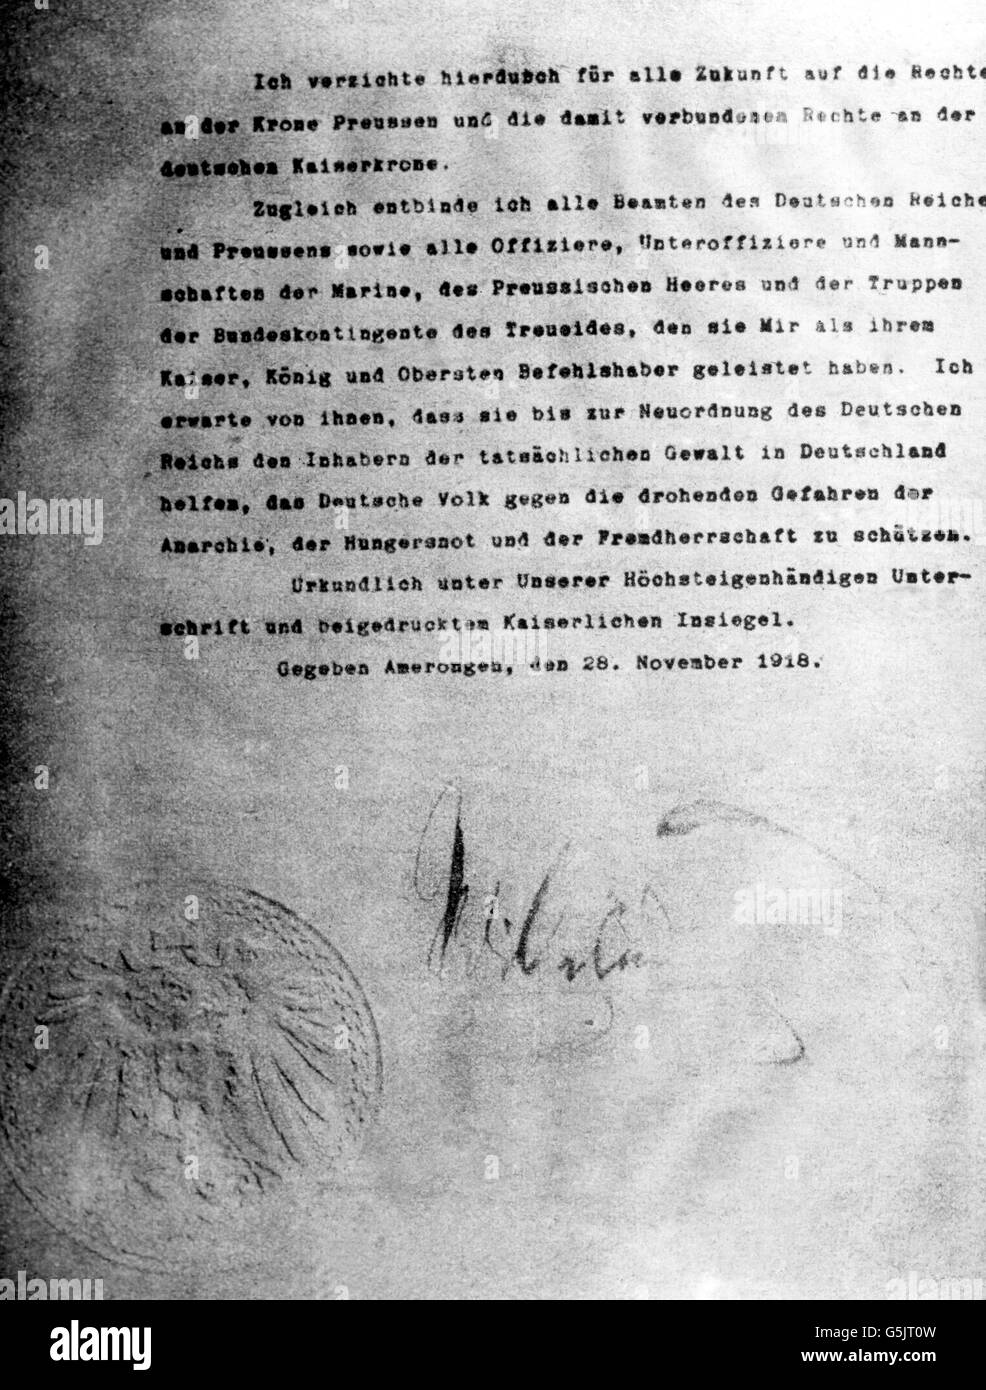 Prima guerra mondiale - Kaiser Wilhelm II - abdicazione. Documento ufficiale di abdicazione di Kaiser Wilhelm II. Foto Stock